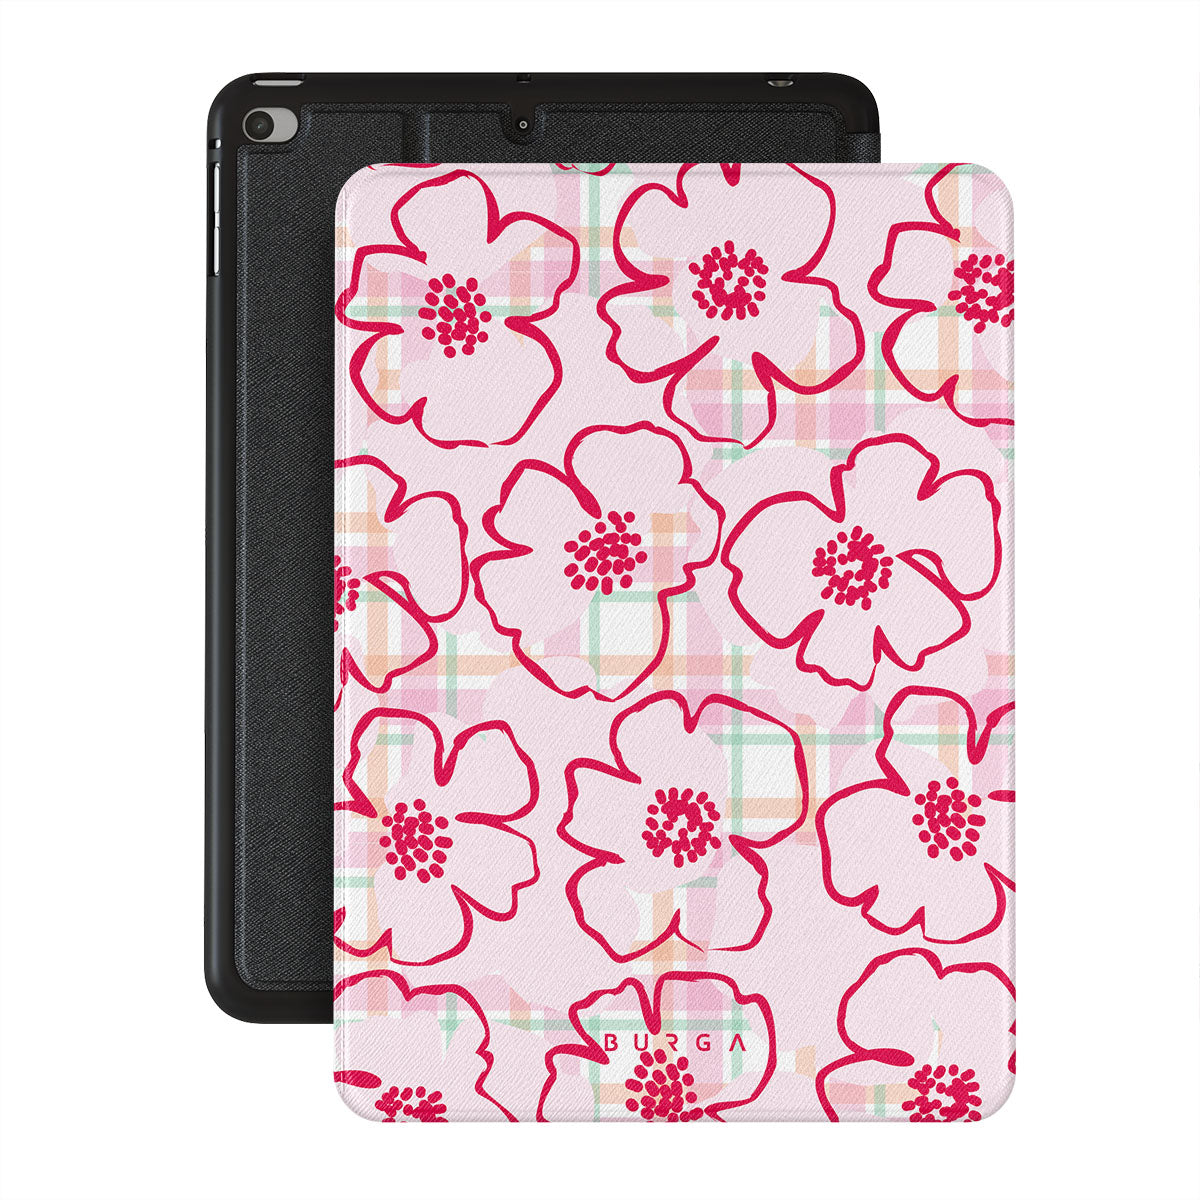 Flower Girl - iPad Mini 7.9 (5th Gen) Case | BURGA